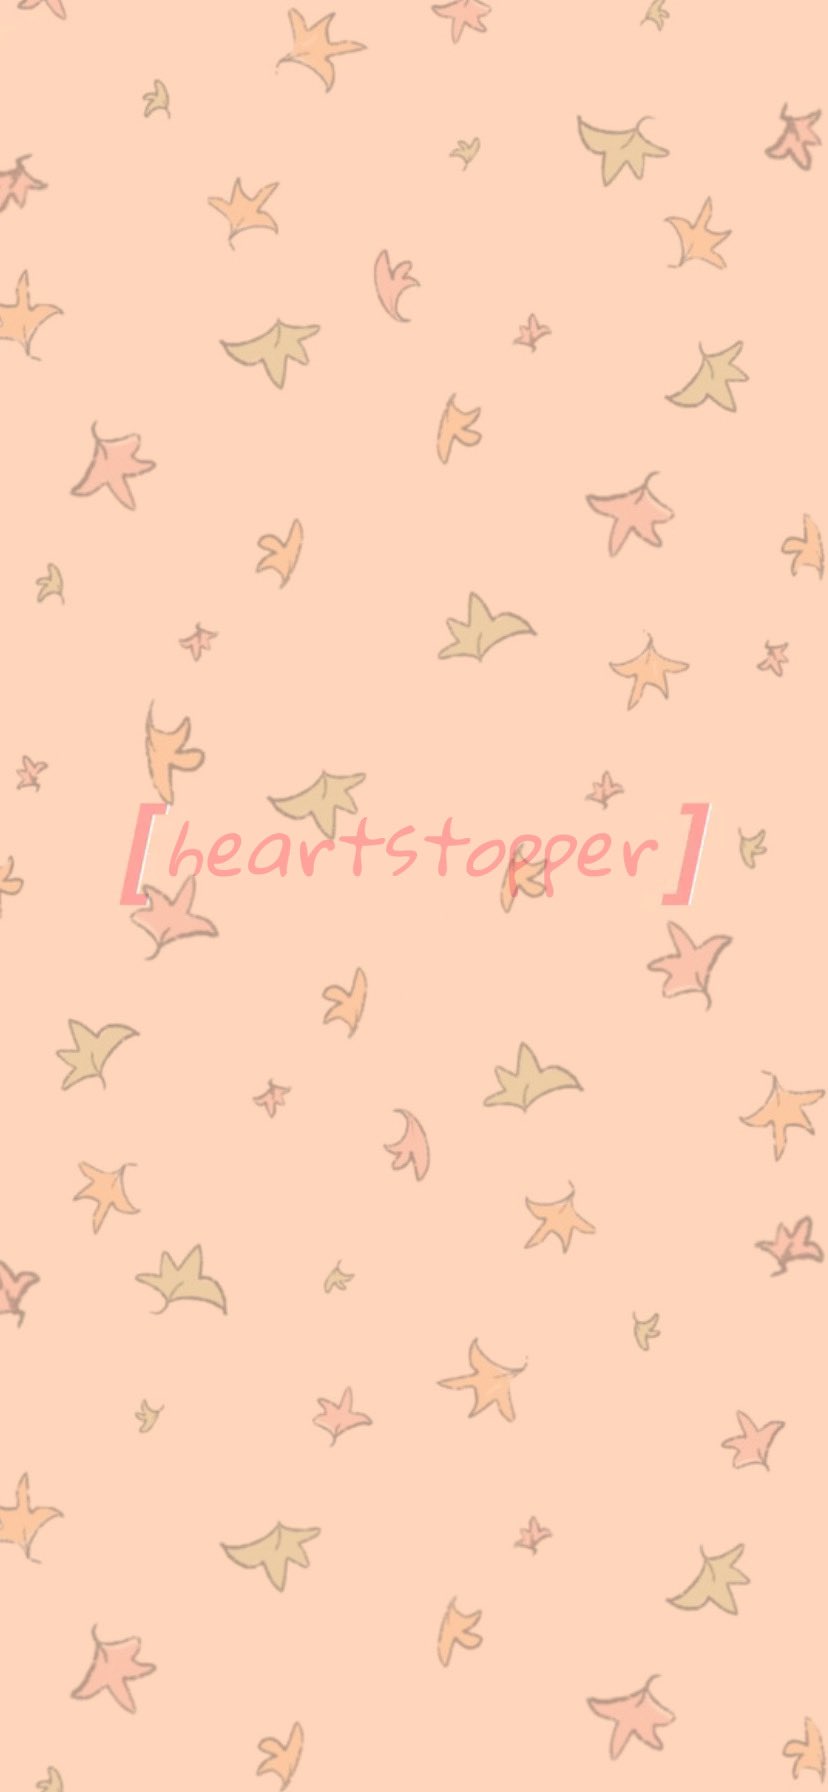 Heartstopper wallpaper  Aesthetic iphone wallpaper Iphone wallpaper  music Leaf wallpaper